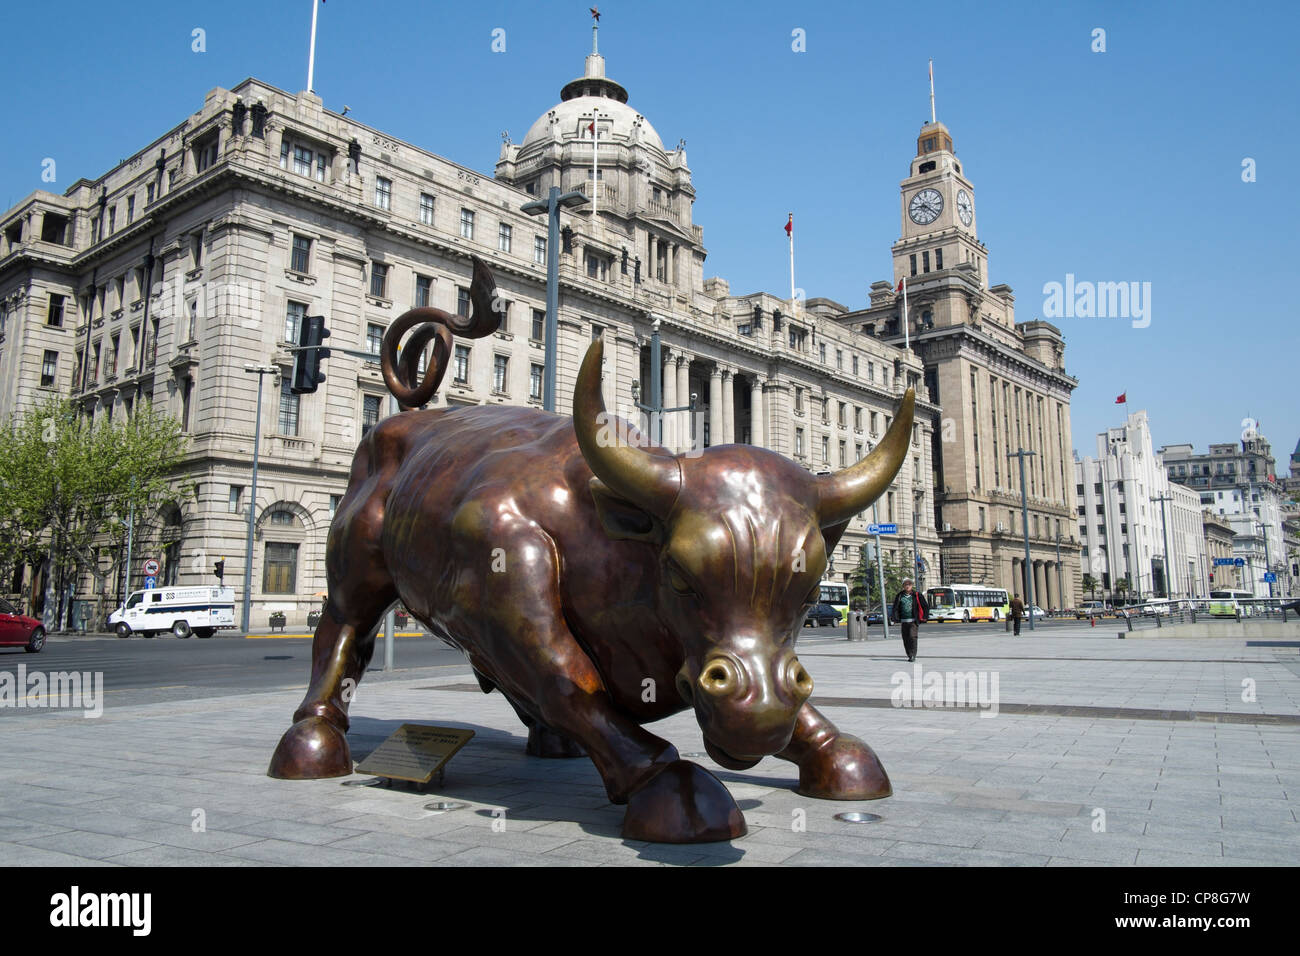 La scultura in bronzo di bull sul Bund a Shanghai in Cina Foto Stock